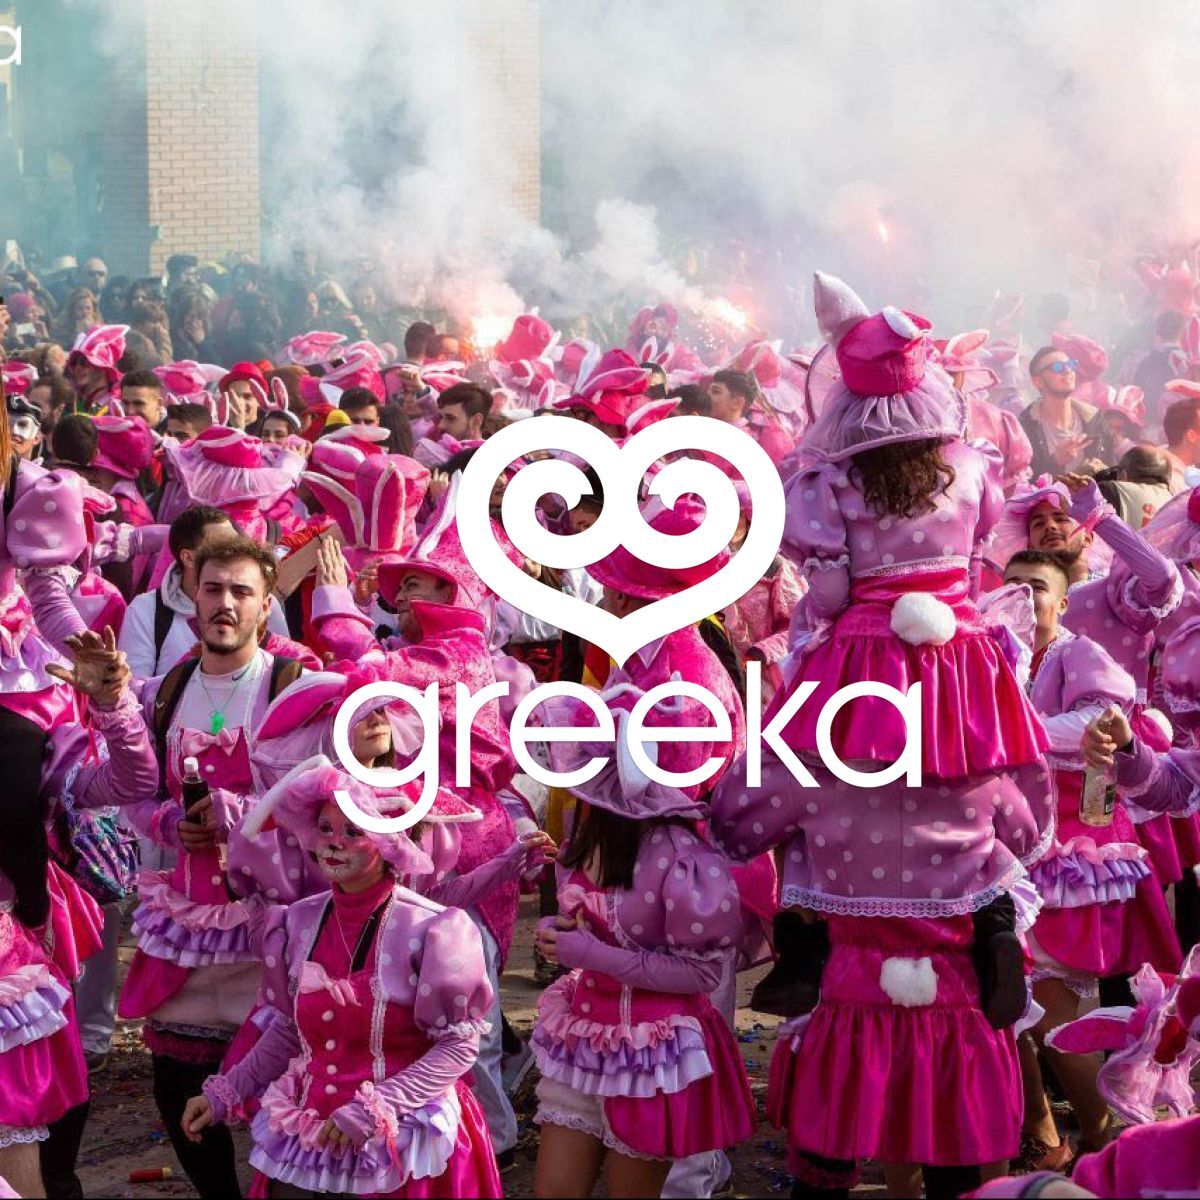 Greece festivals and events holidays Greeka